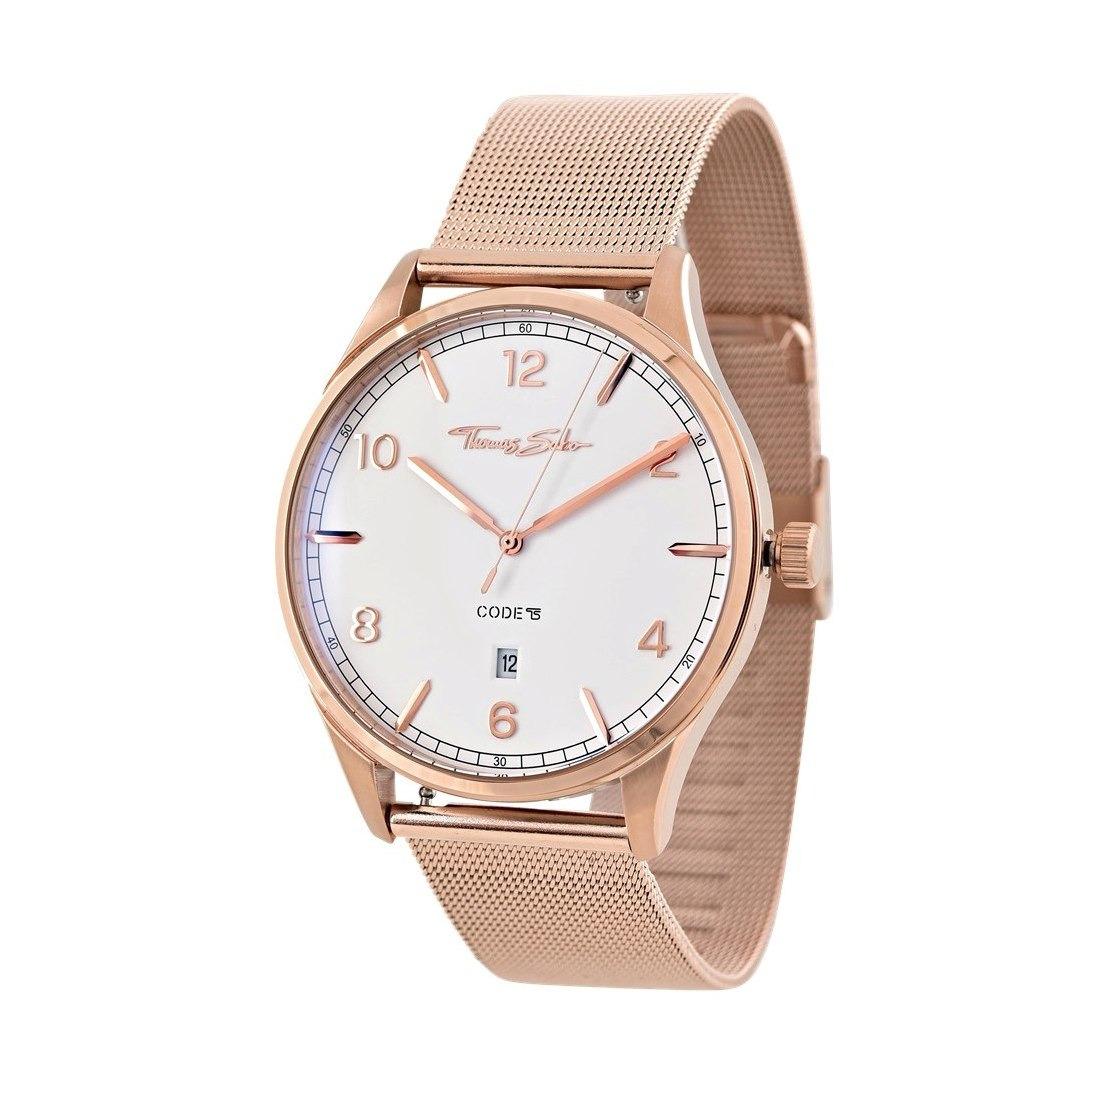 Luxusná značka THOMAS SABO mod. Code-TS - nové, záruka, zľava 3200 Kč - Šperky a hodinky